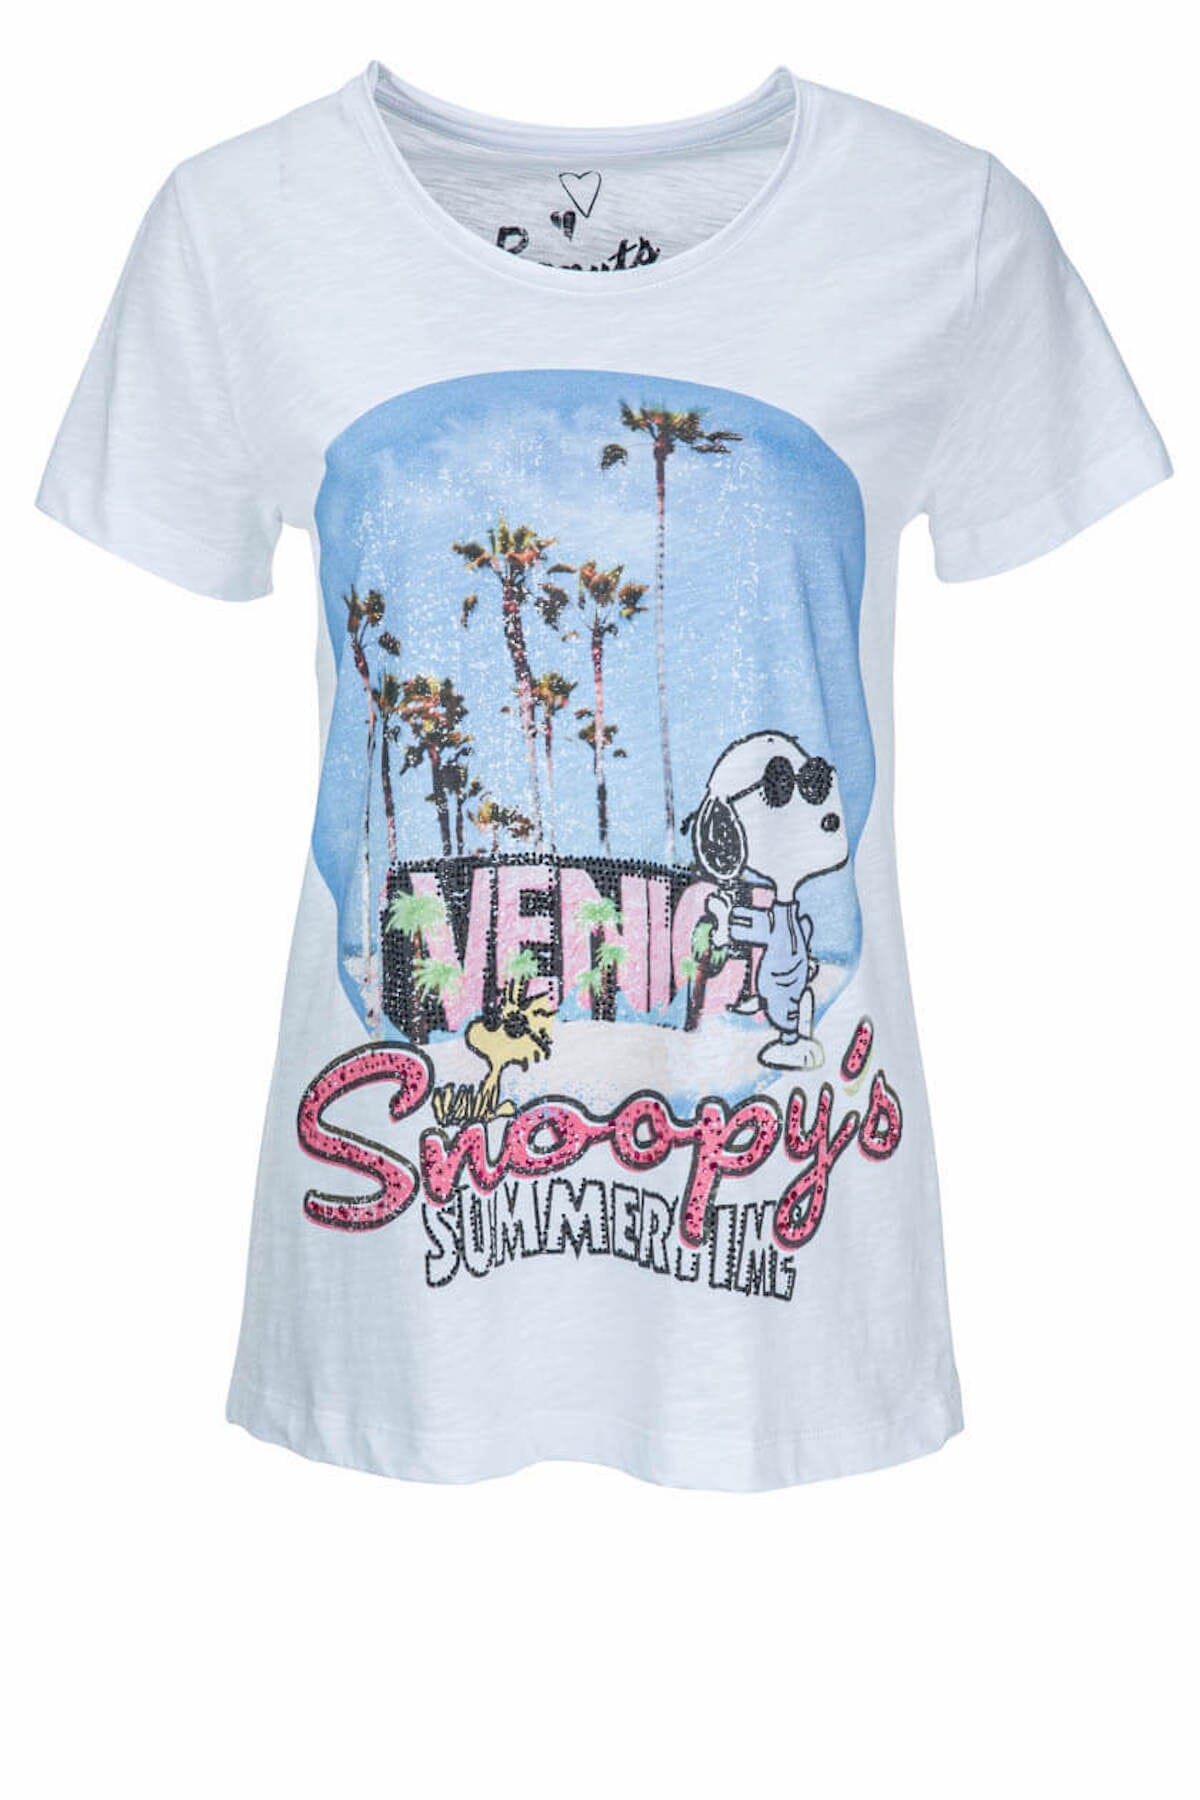 T-shirt l'été de Snoopy Princess Goes Hollywood 